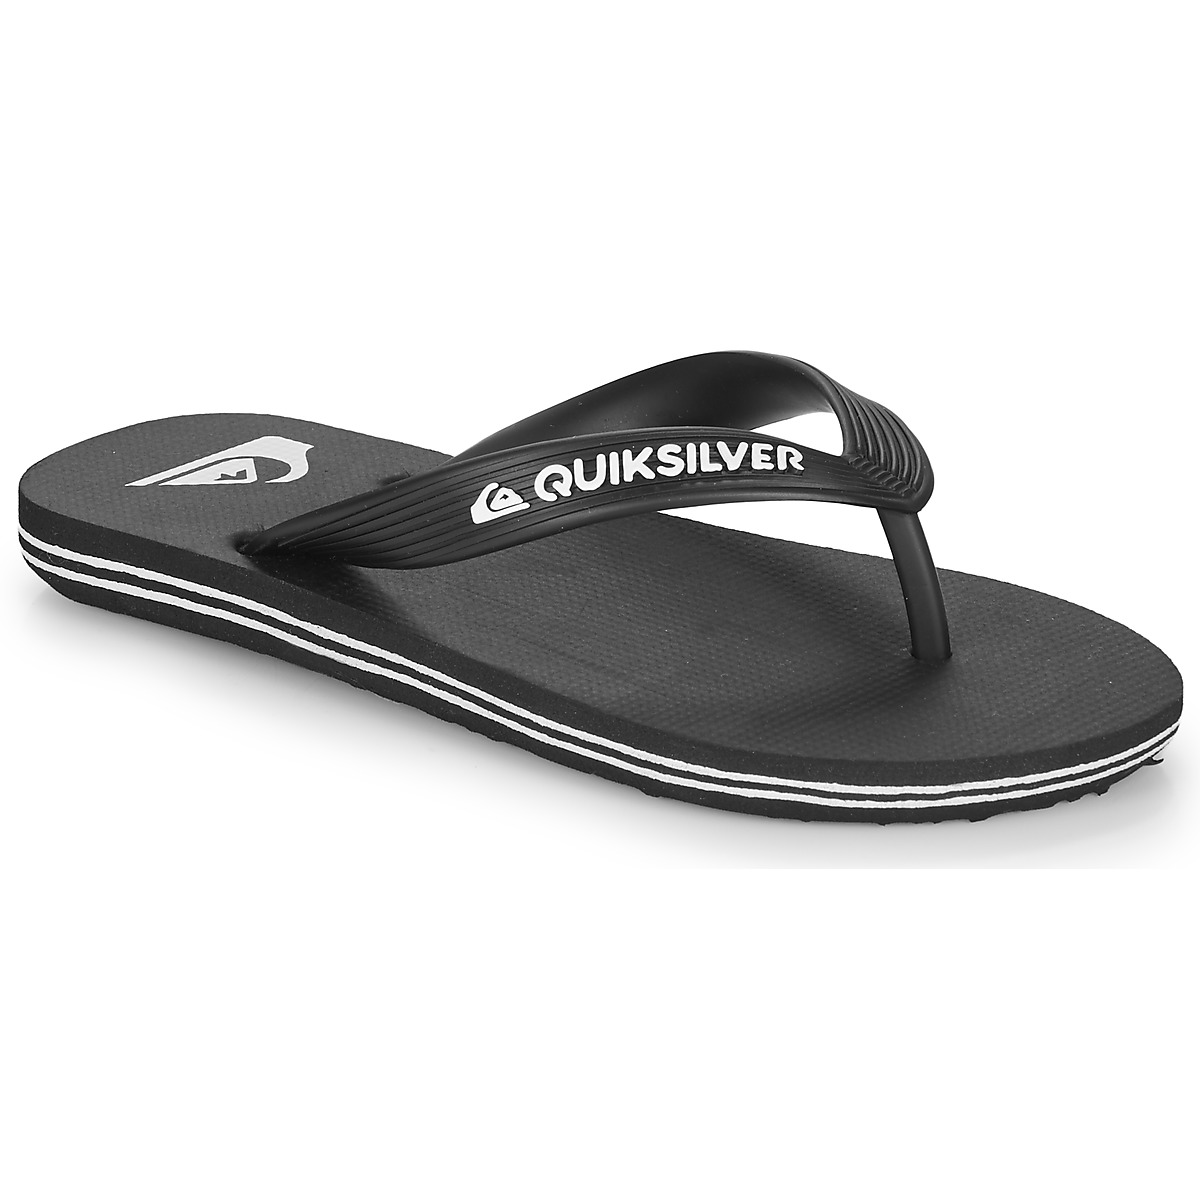 quiksilver  molokai youth  boys's children's flip flops / sandals in black